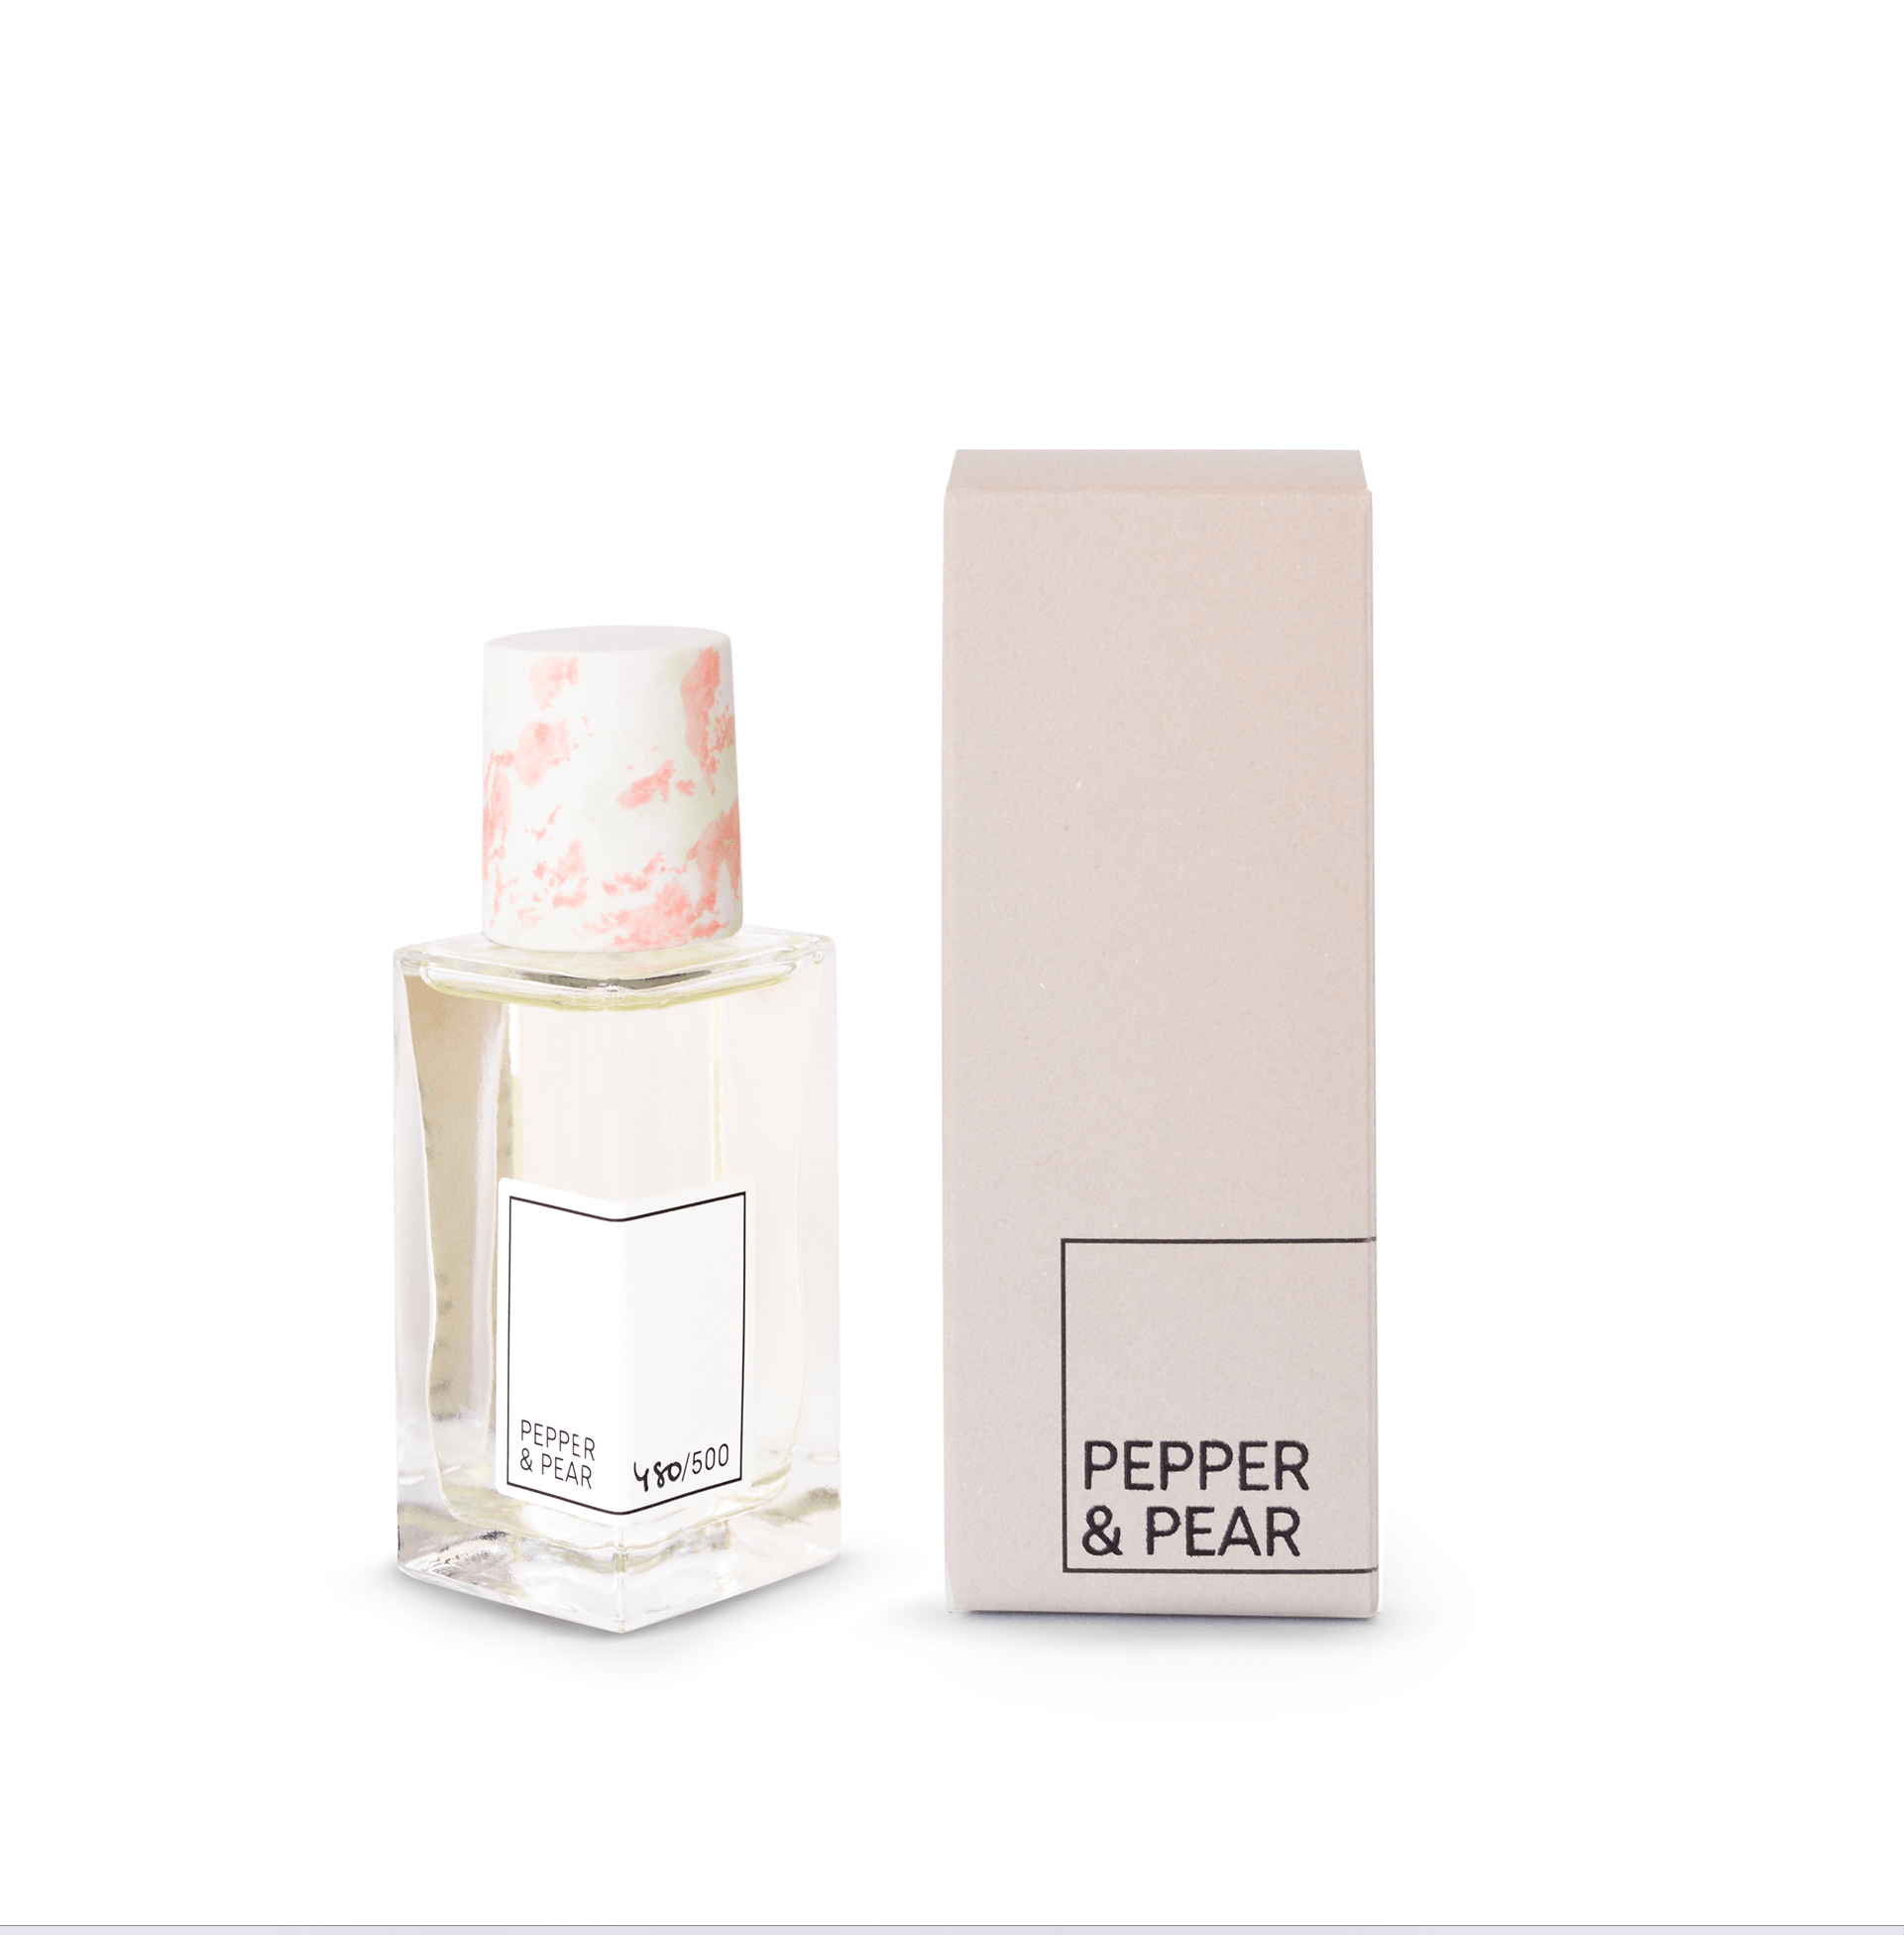 Pepper & Pear eau de perfume